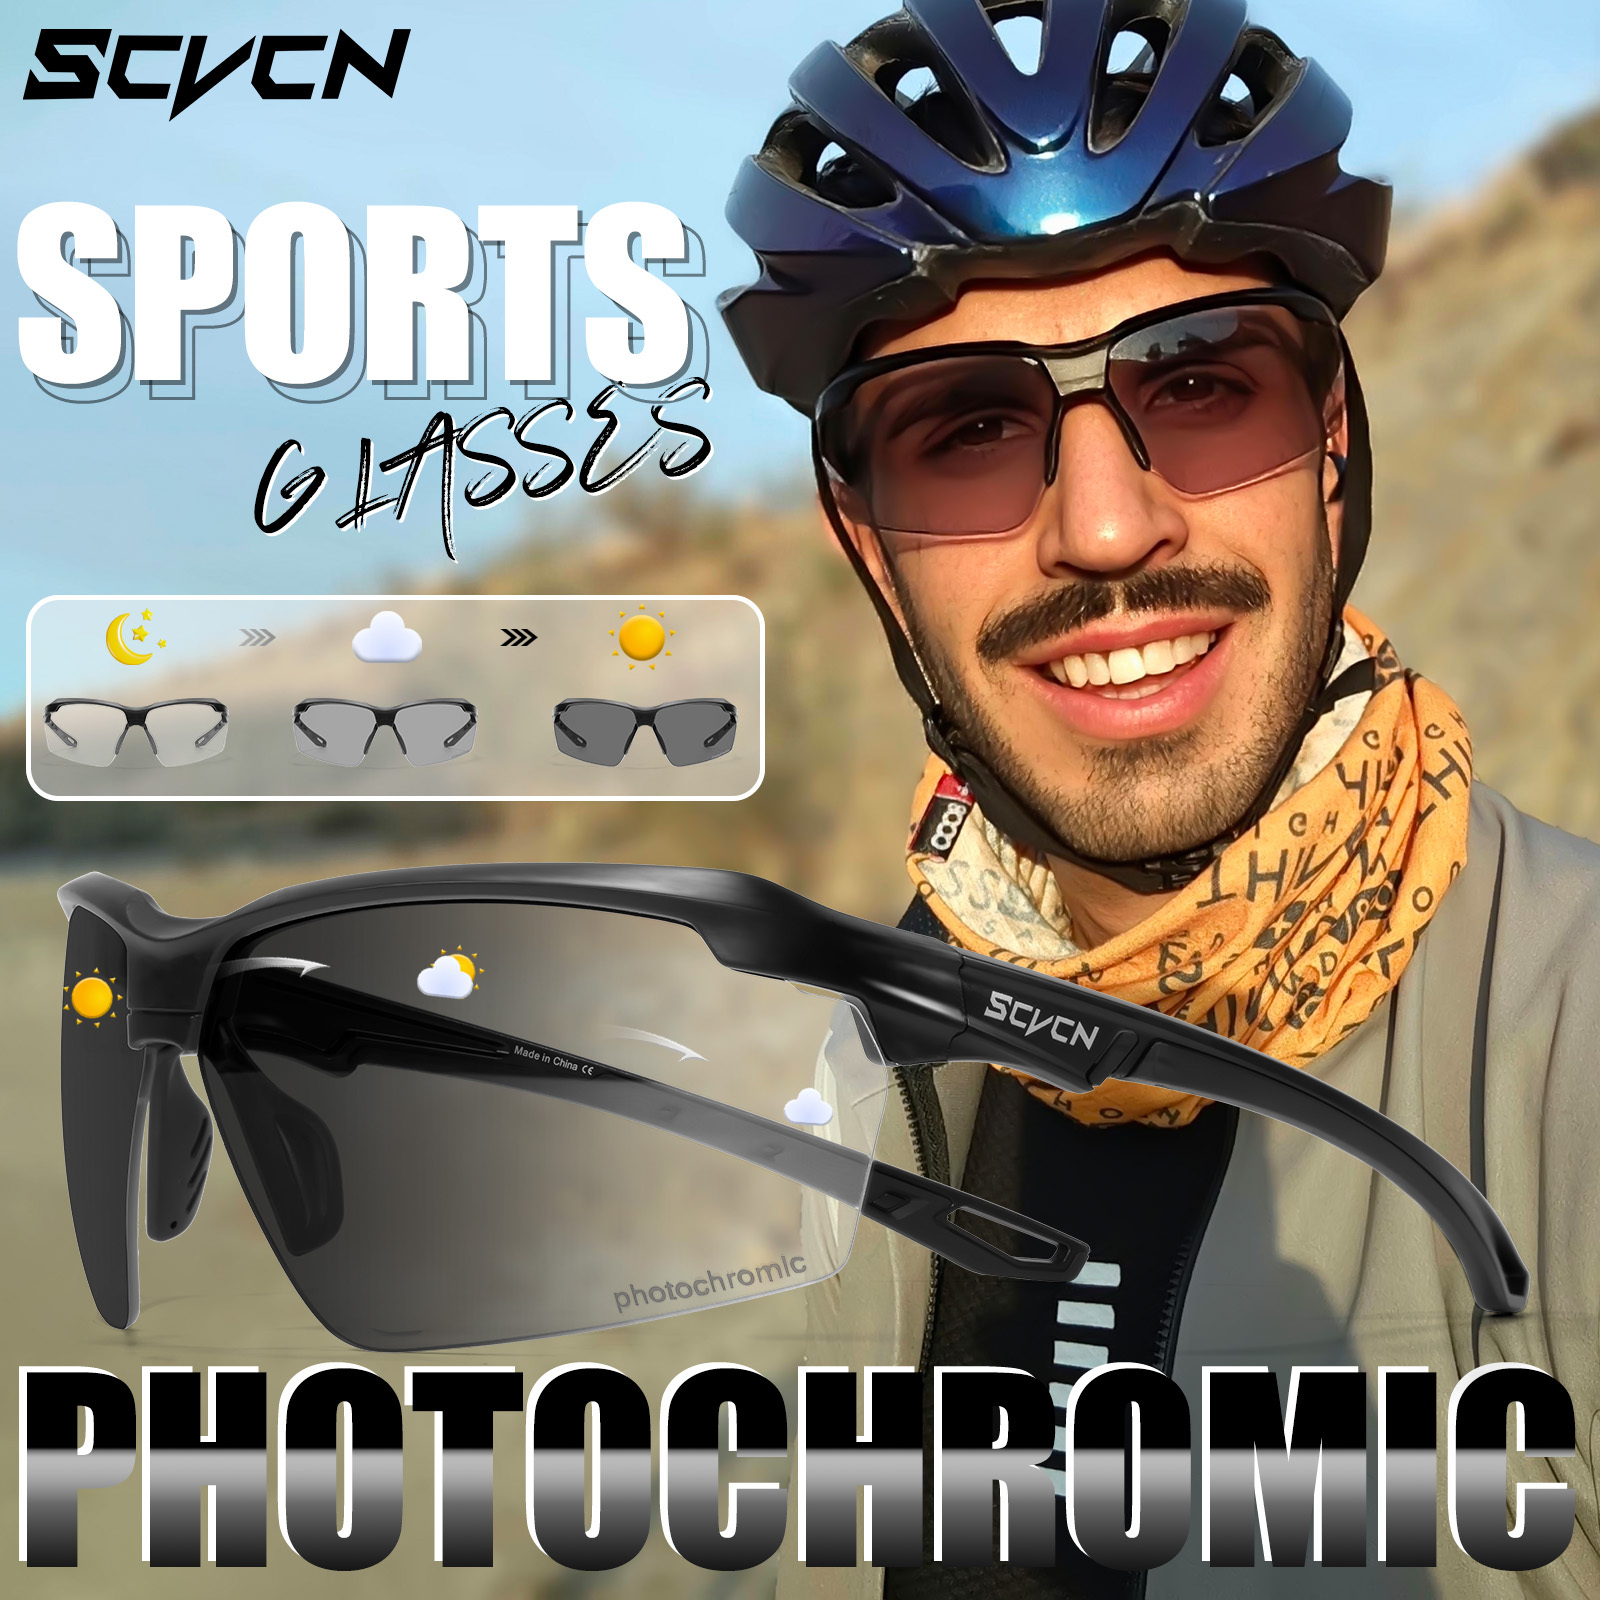 

Scvcn Photochromic Cycling Glasses: Lightweight Tr Frame & Pc Lens For Men & Women - Adjustable For All Head Sizes